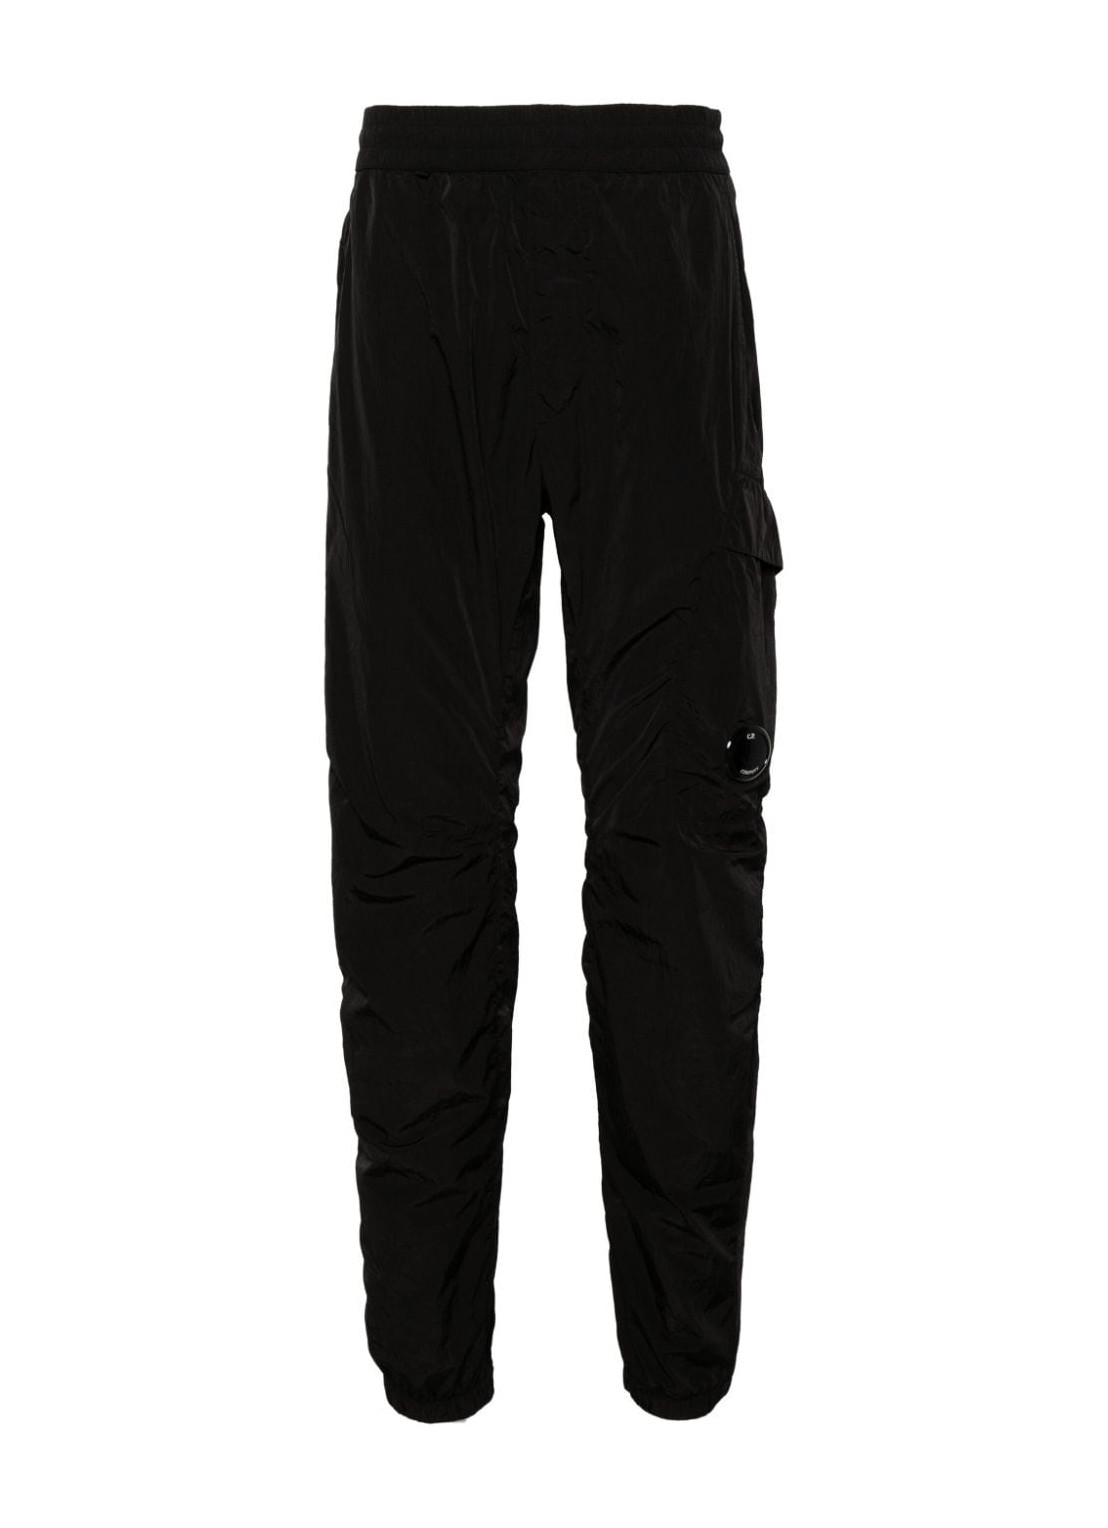 Pantalon c.p.company pant  man chrome-r regular track pants 16cmpa053a005904g 999 talla negro
 